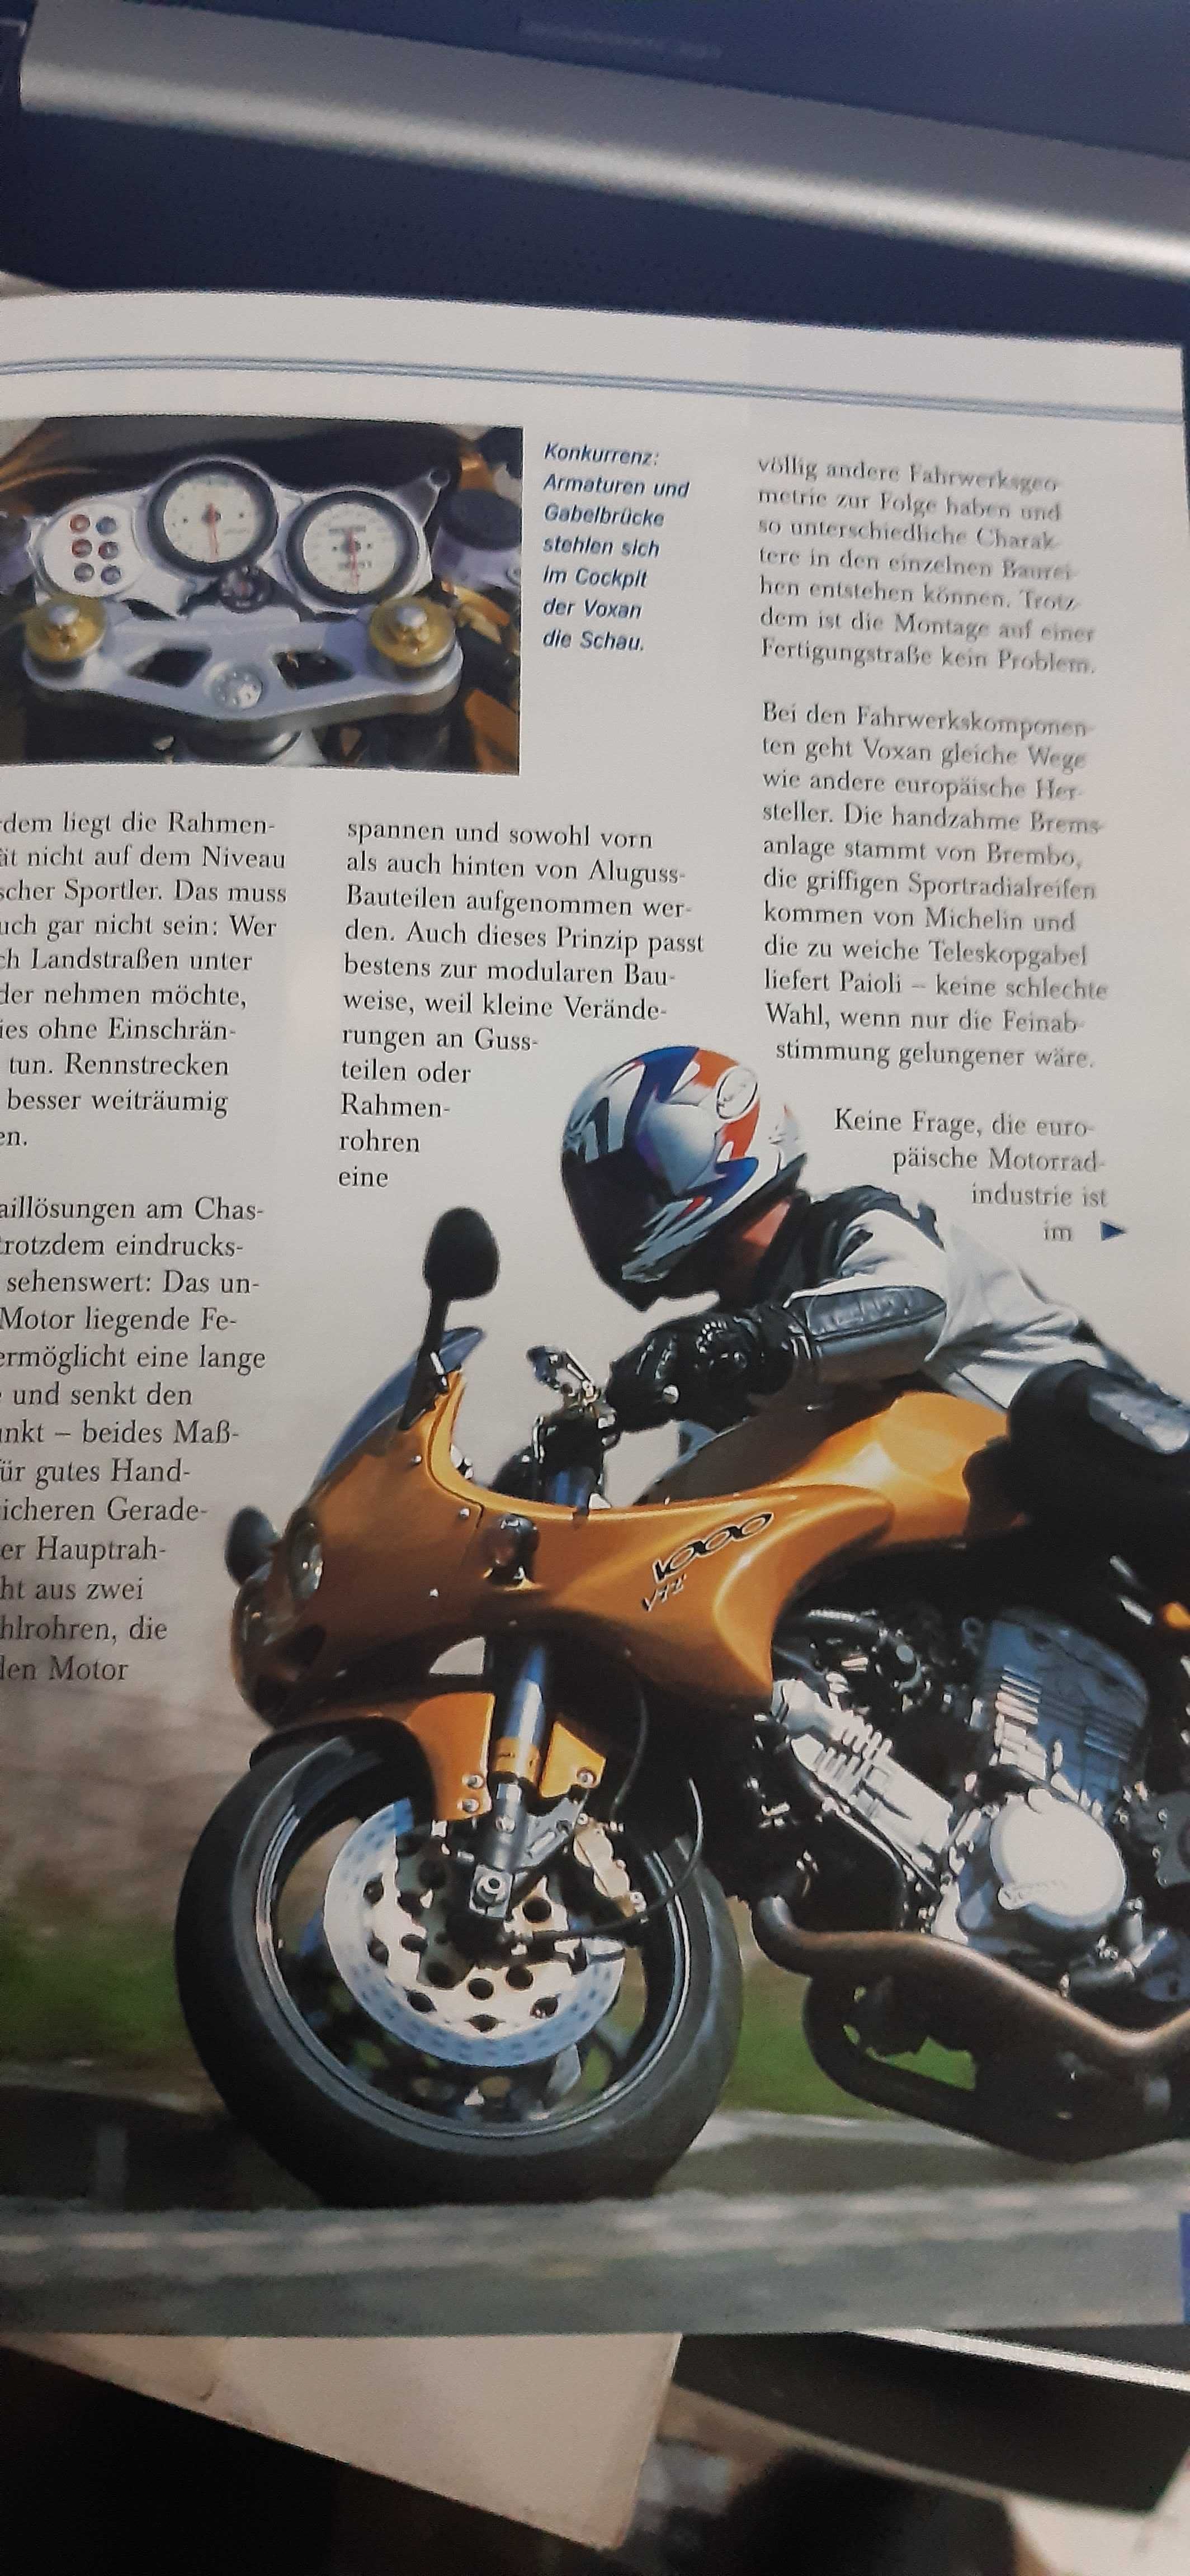 stara gazeta motocyklowa niemiecka aral 4/2001